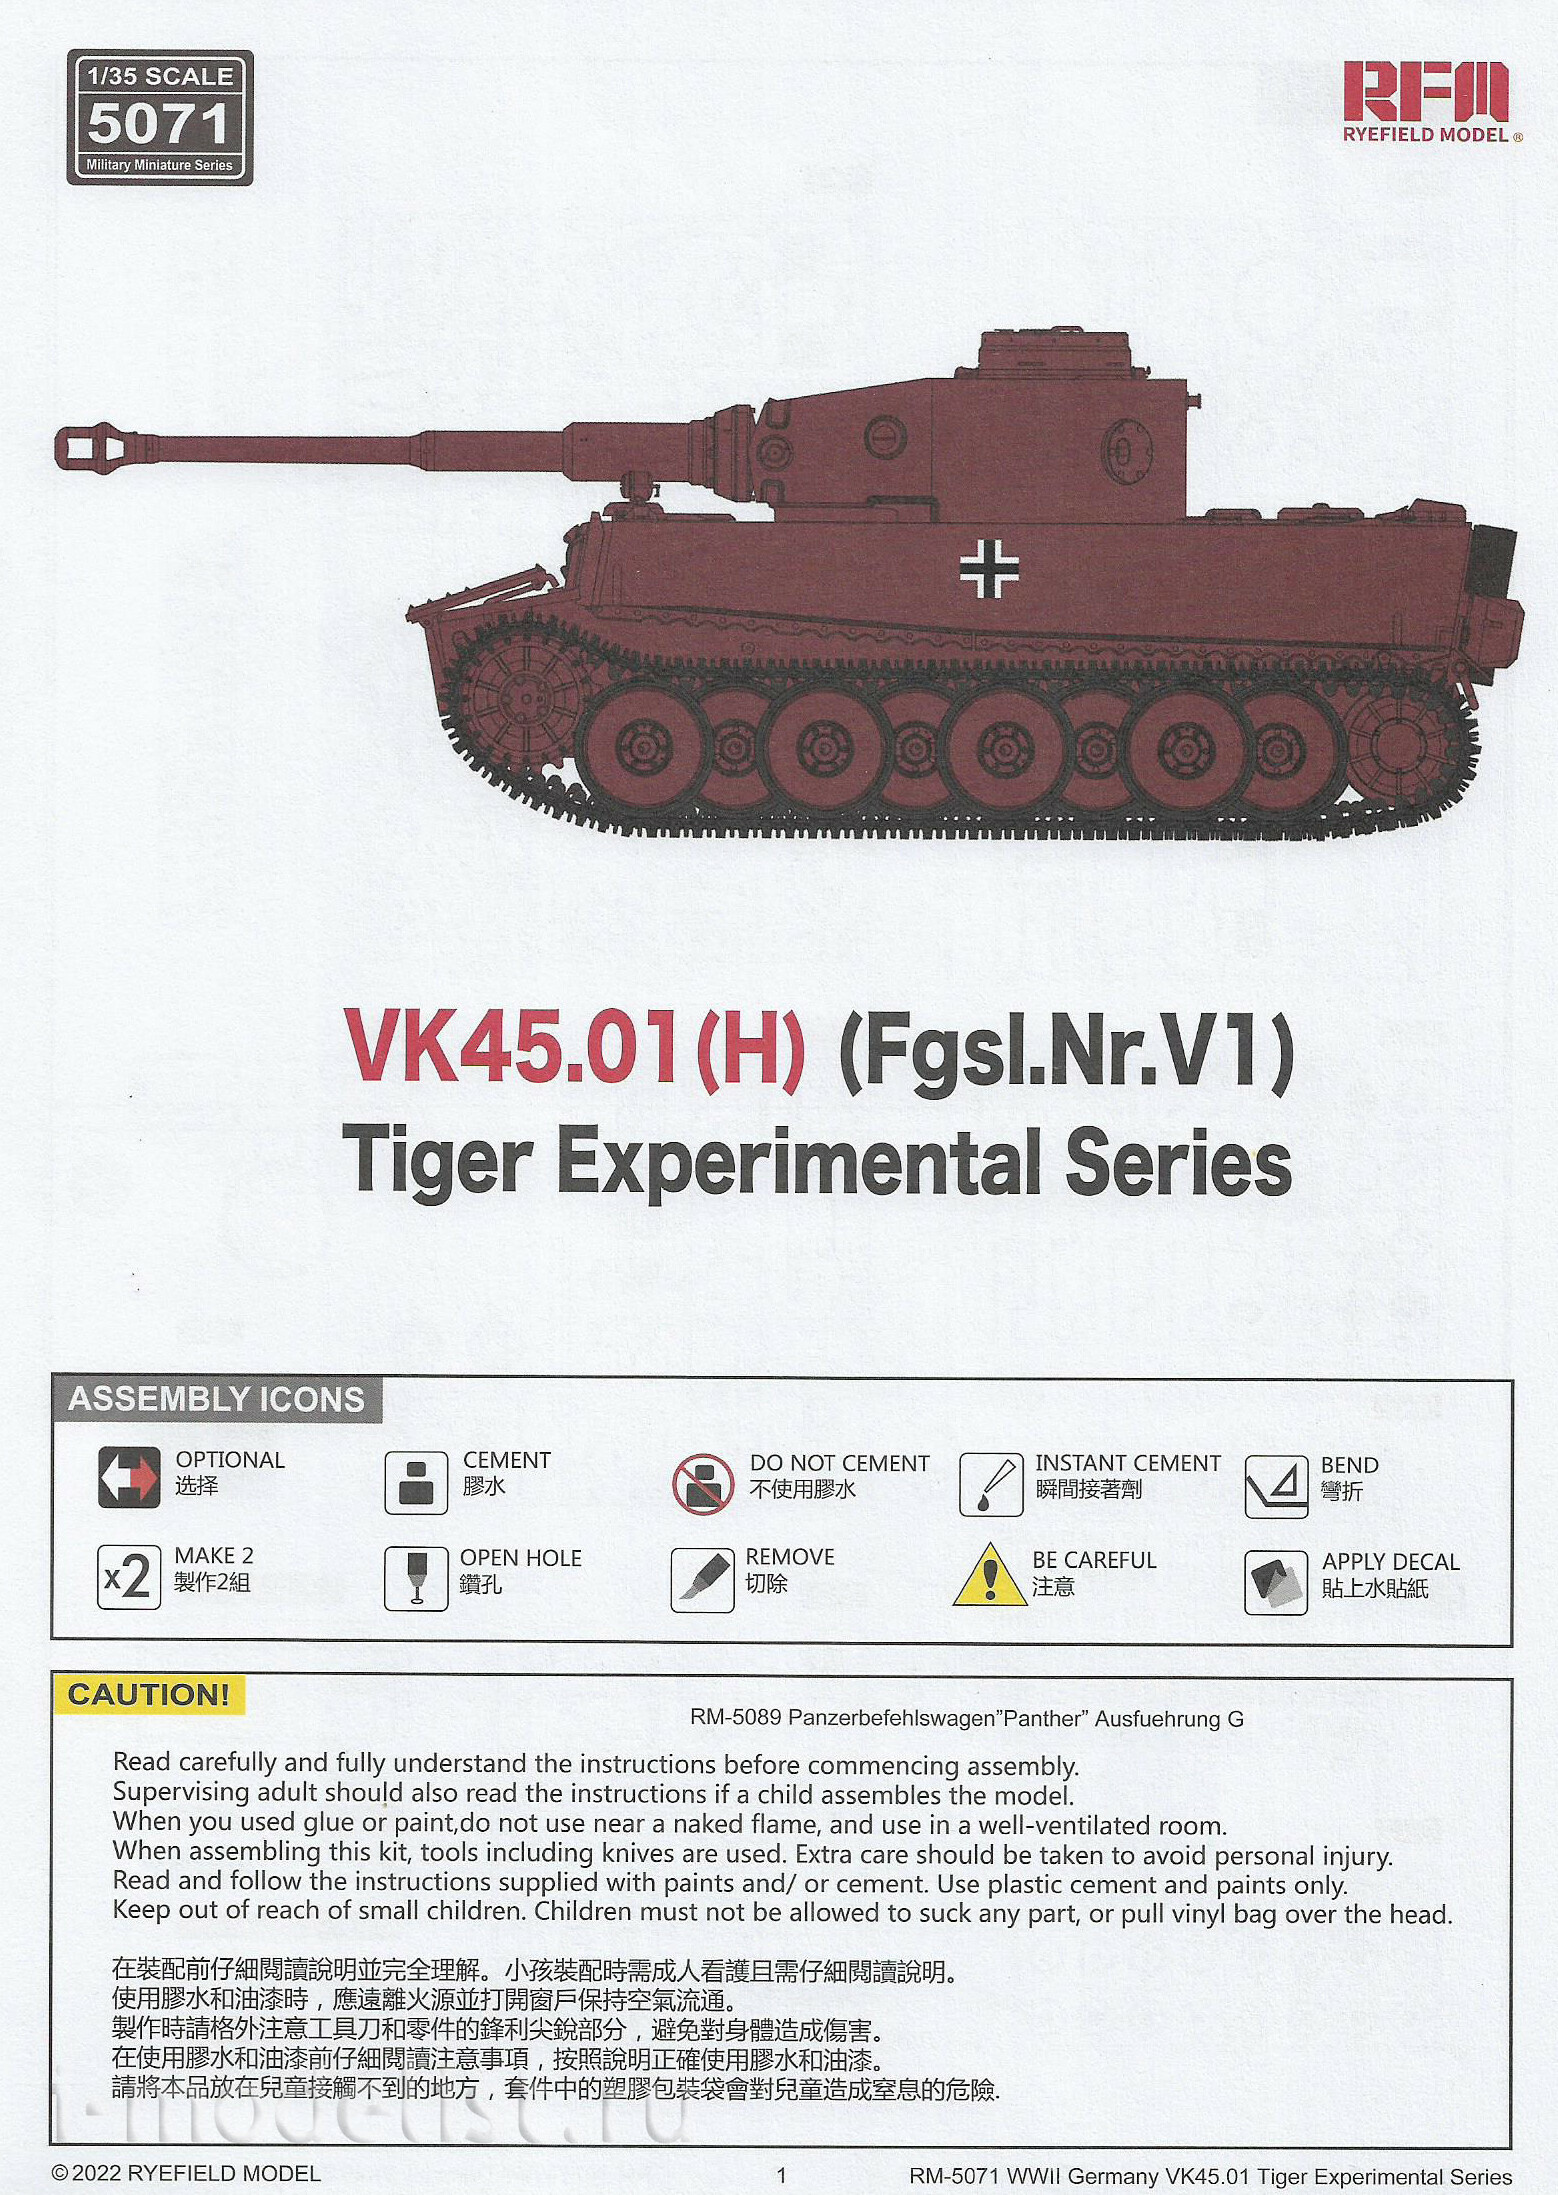 RM-5071 Rye Field Model 1/35 Немецкий танк VK45.01(H) (Fgsl.Nr.V1), прототип Tiger I